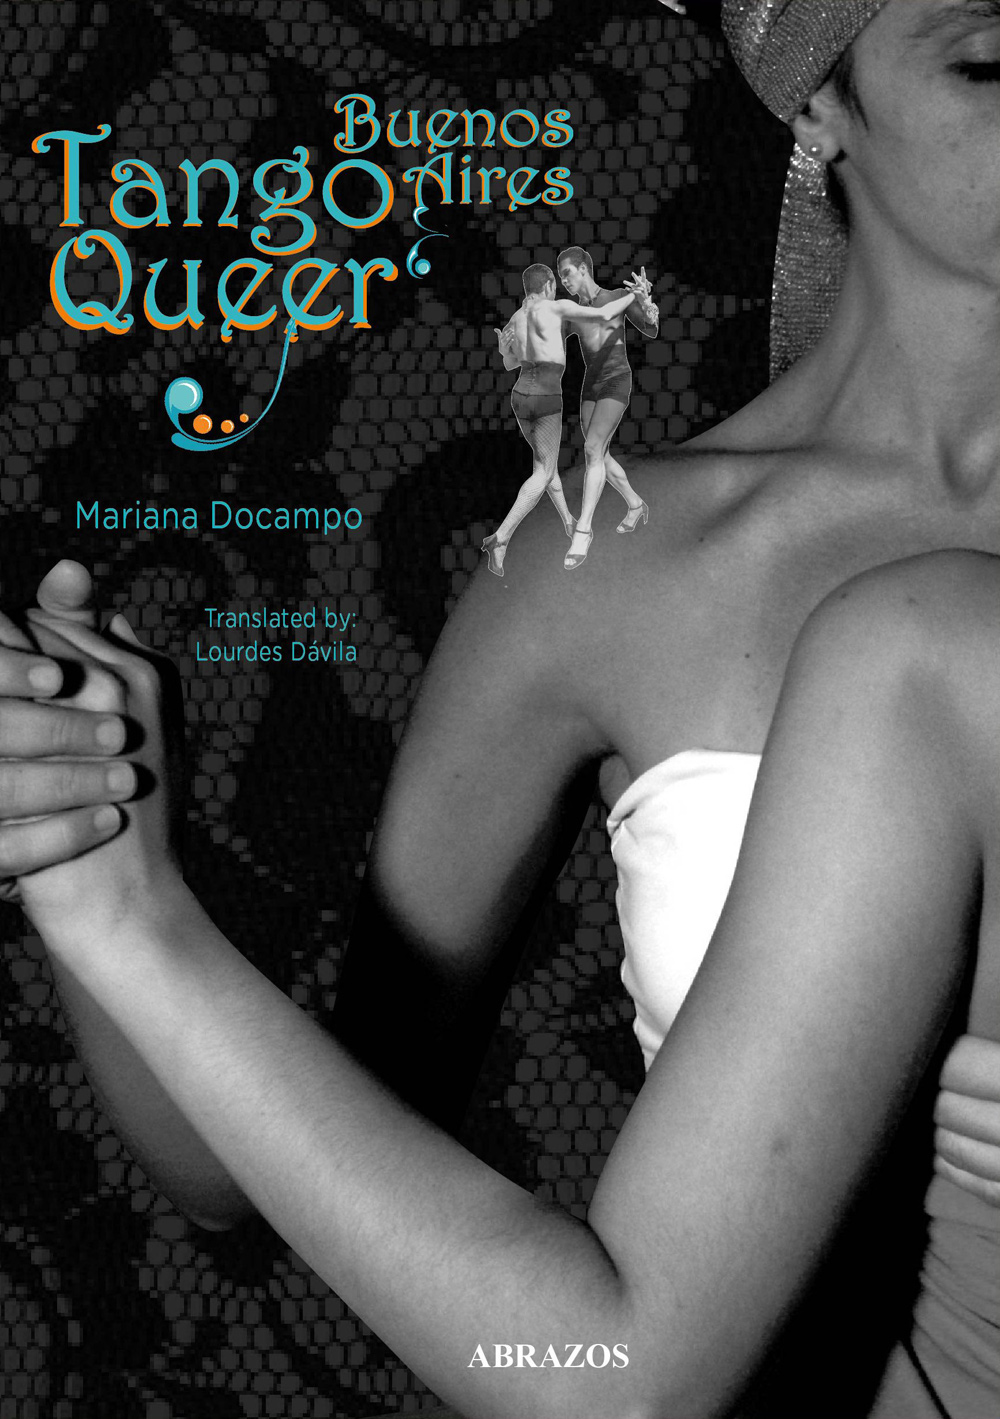 Pre-order ‘Tango Queer Buenos Aires’ by Mariana Docampo